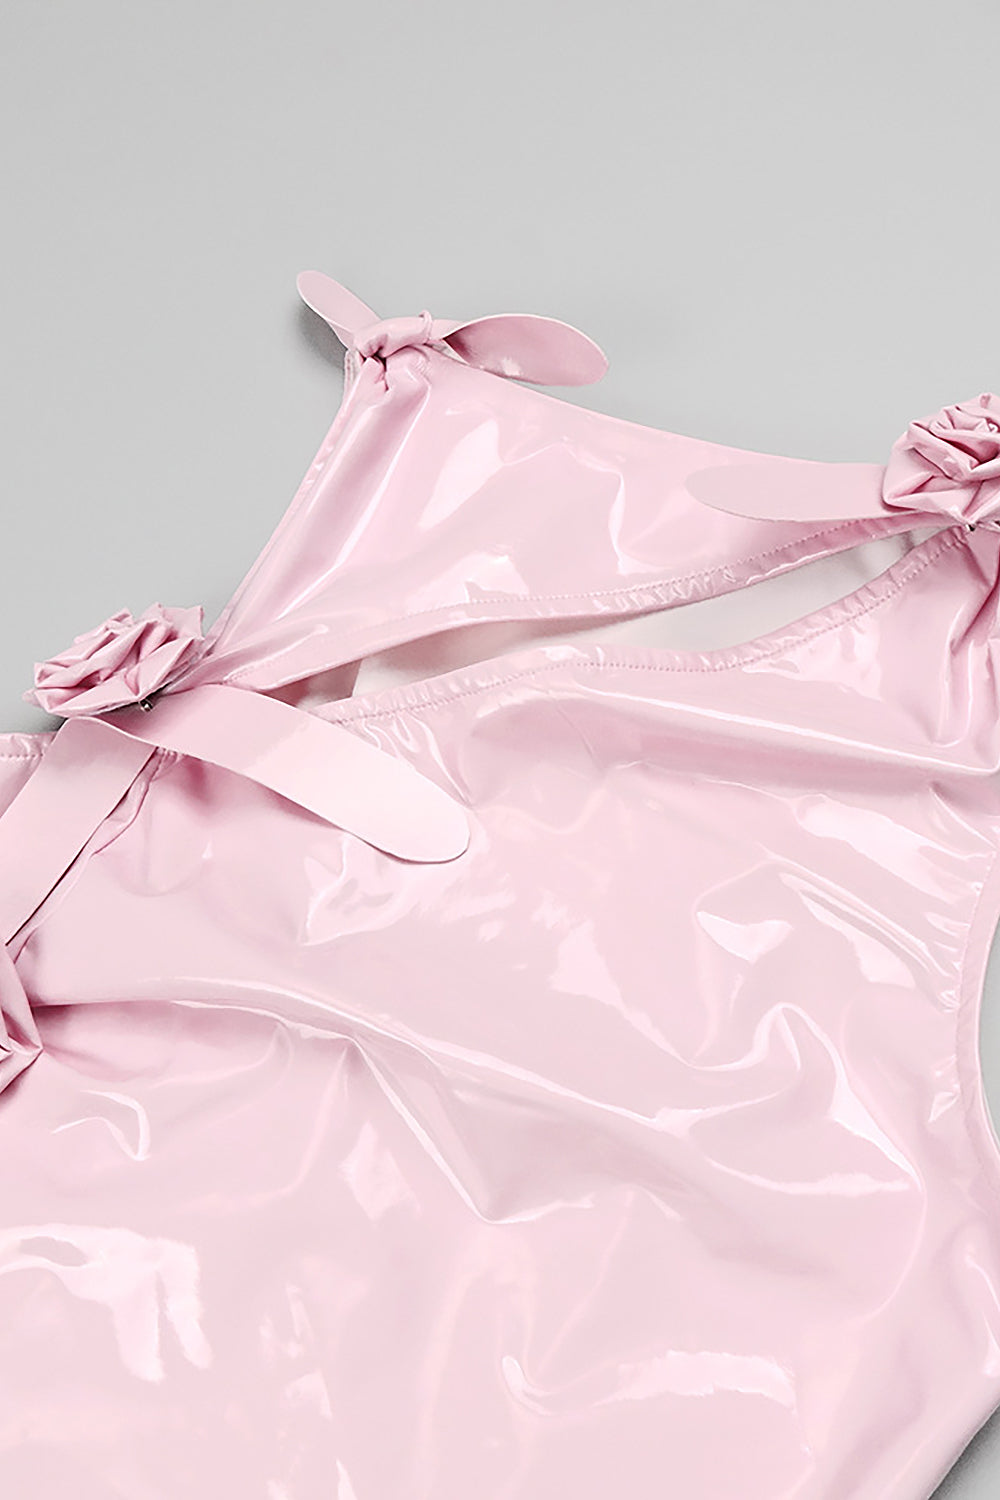 Kylie Jenner Glam com vestido de látex Edgy Skintight em branco rosa